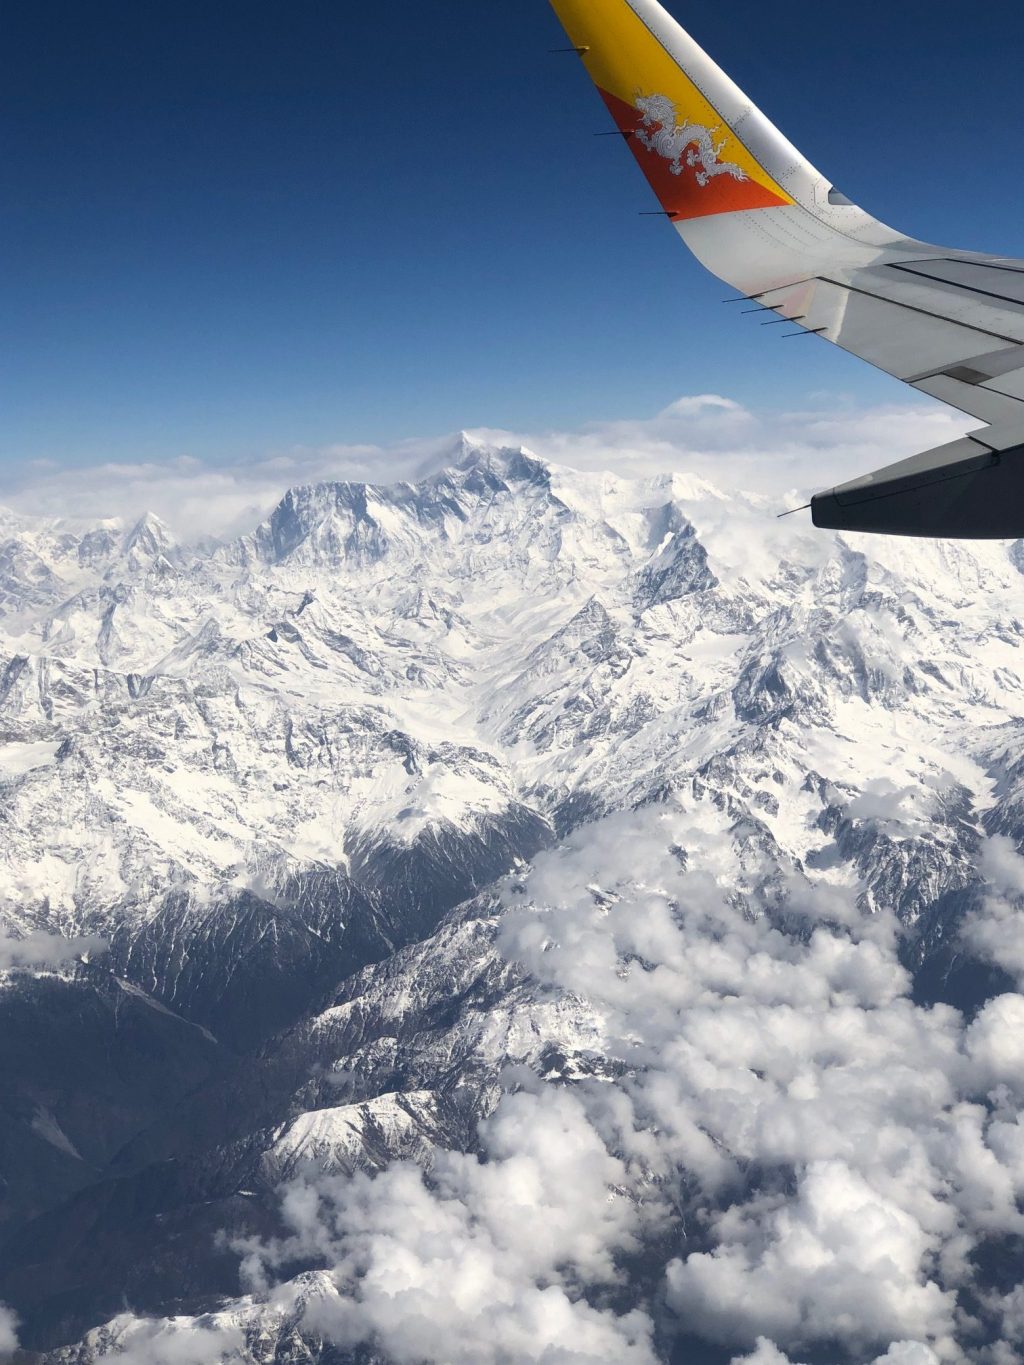 Mt Everest and Lhotse